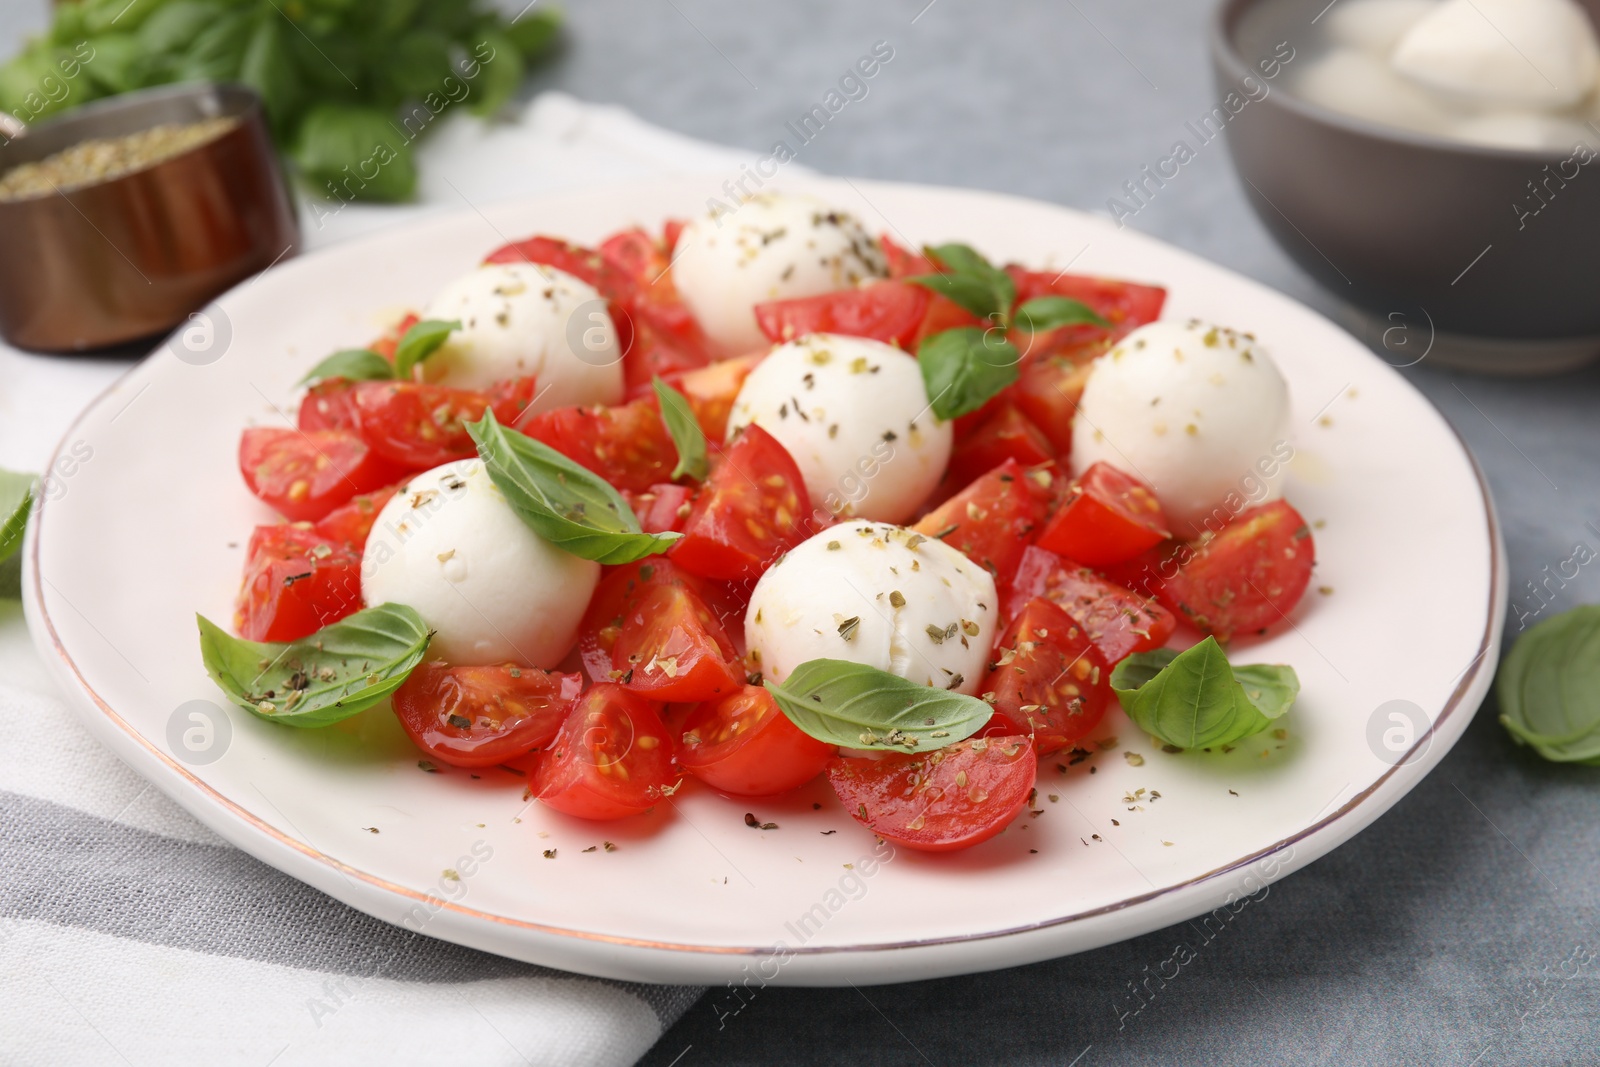 Photo of Tasty salad Caprese with tomatoes, mozzarella balls and basil on grey table, closeup